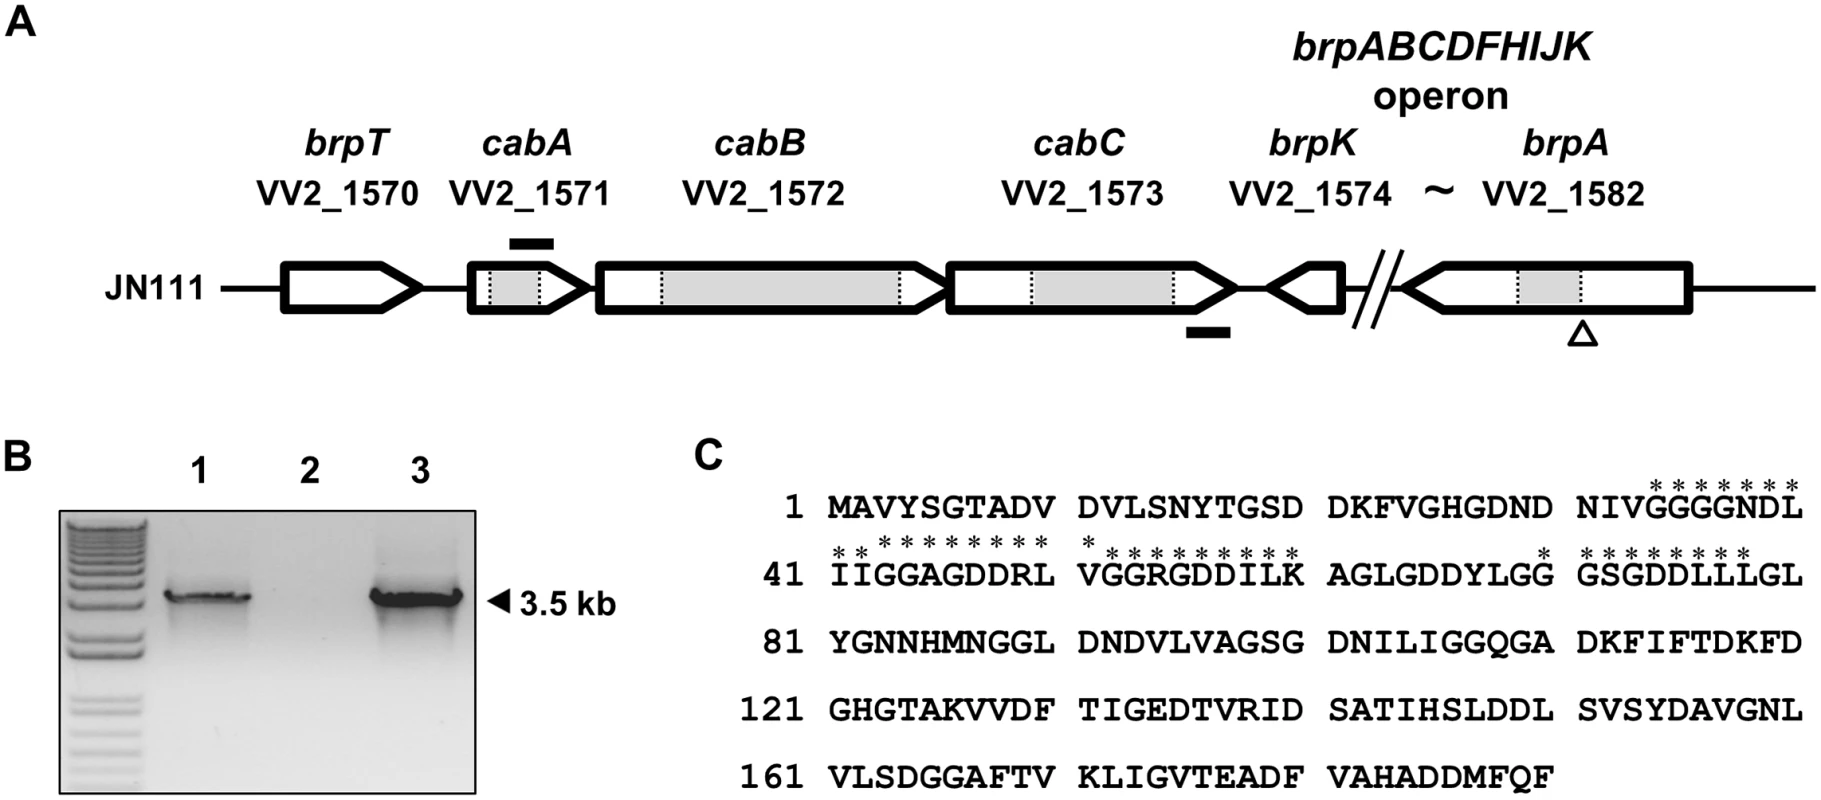 Genetic organization of the <i>cabABC</i> operon and amino acid sequence of CabA.